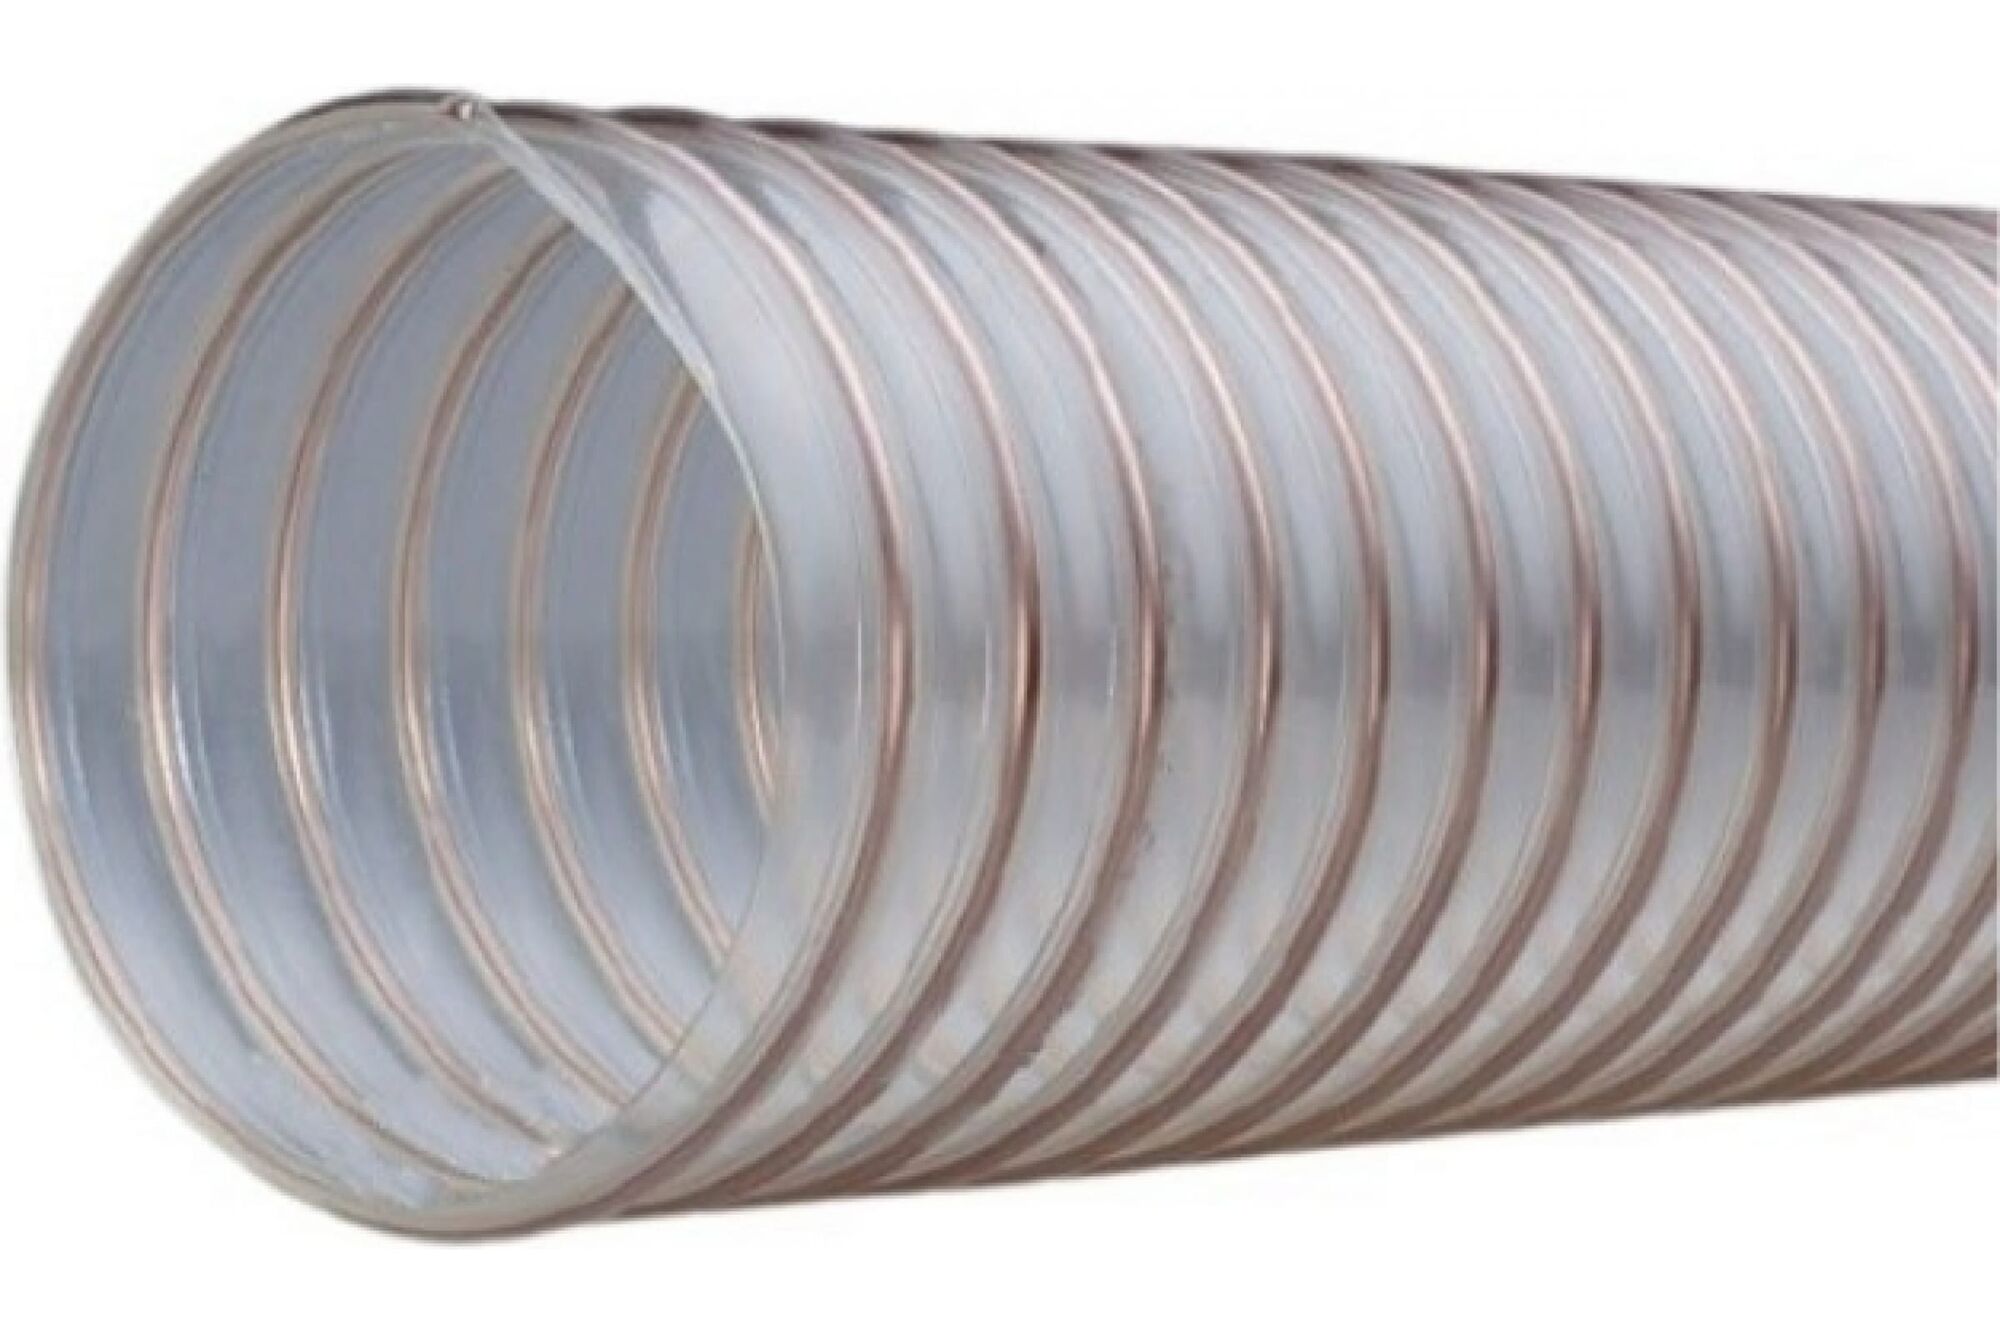 Полиуретановый шланг TITAN LOCK PU (толщ 0.6 мм) абразивостойкий 'KARELIA', внутренний диаметр 32 мм TL032KR06